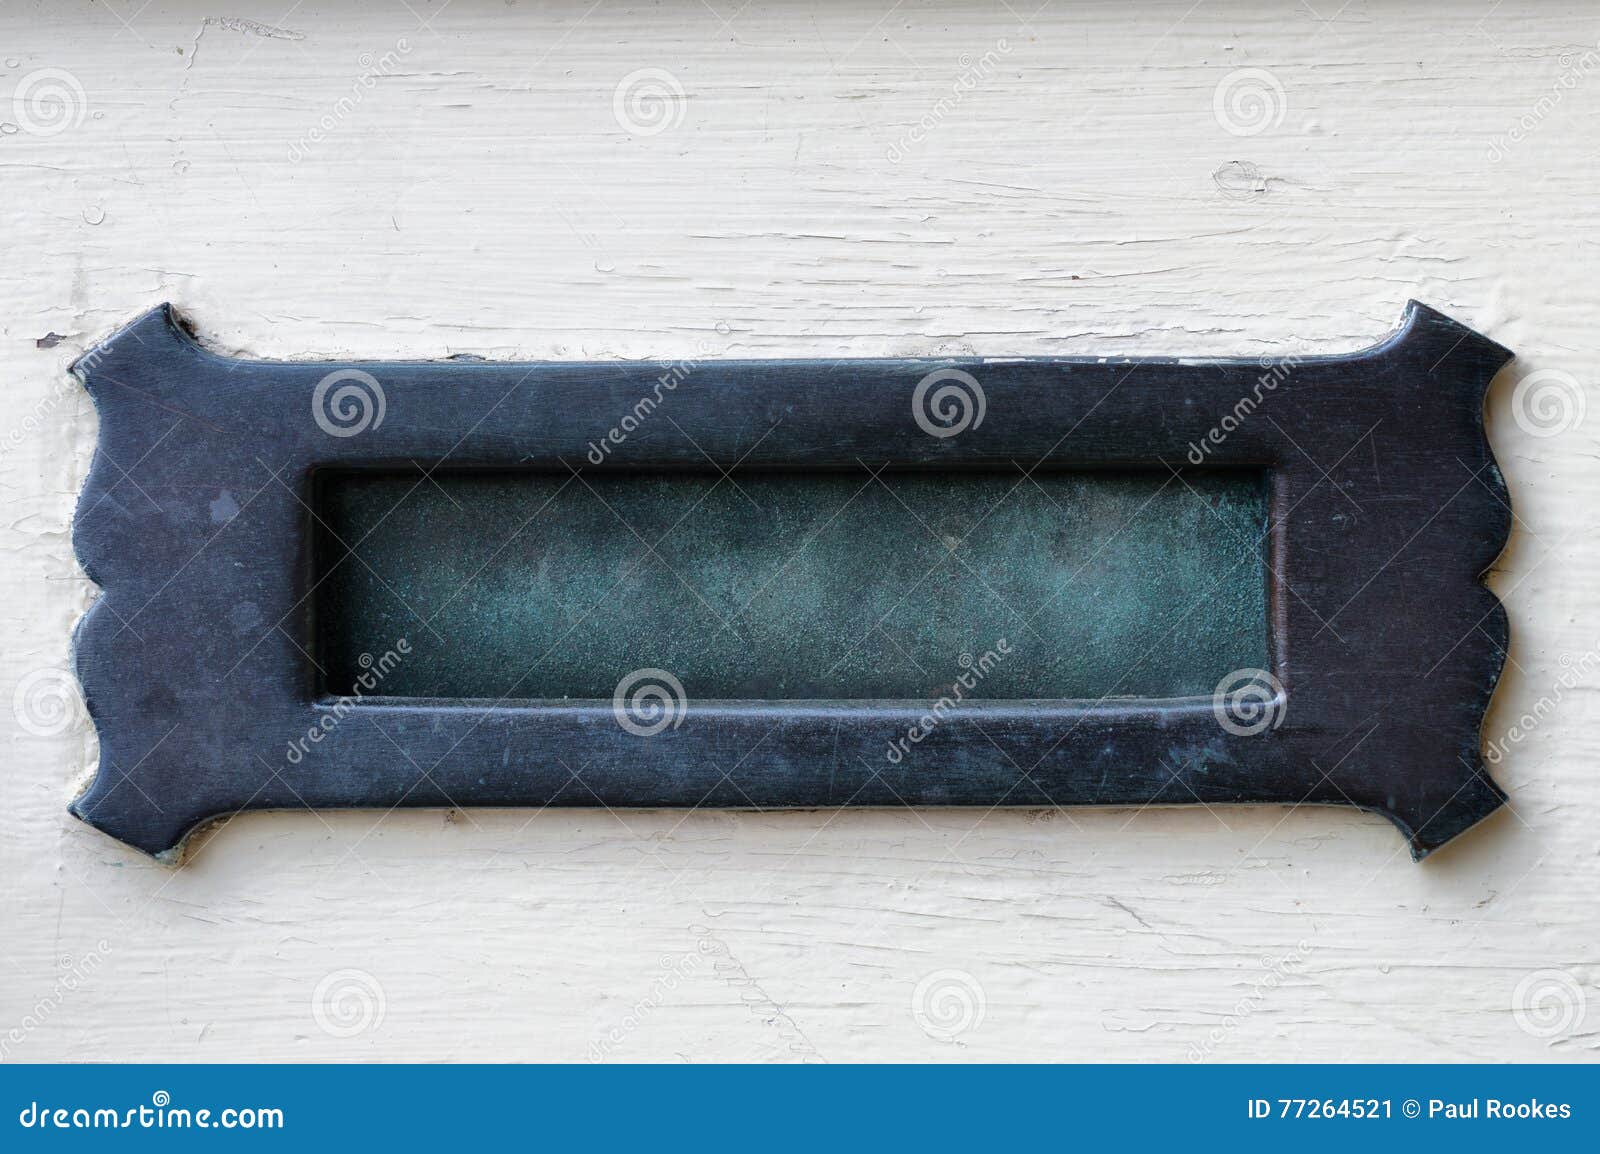 verdigris brass letter box in an off white door.